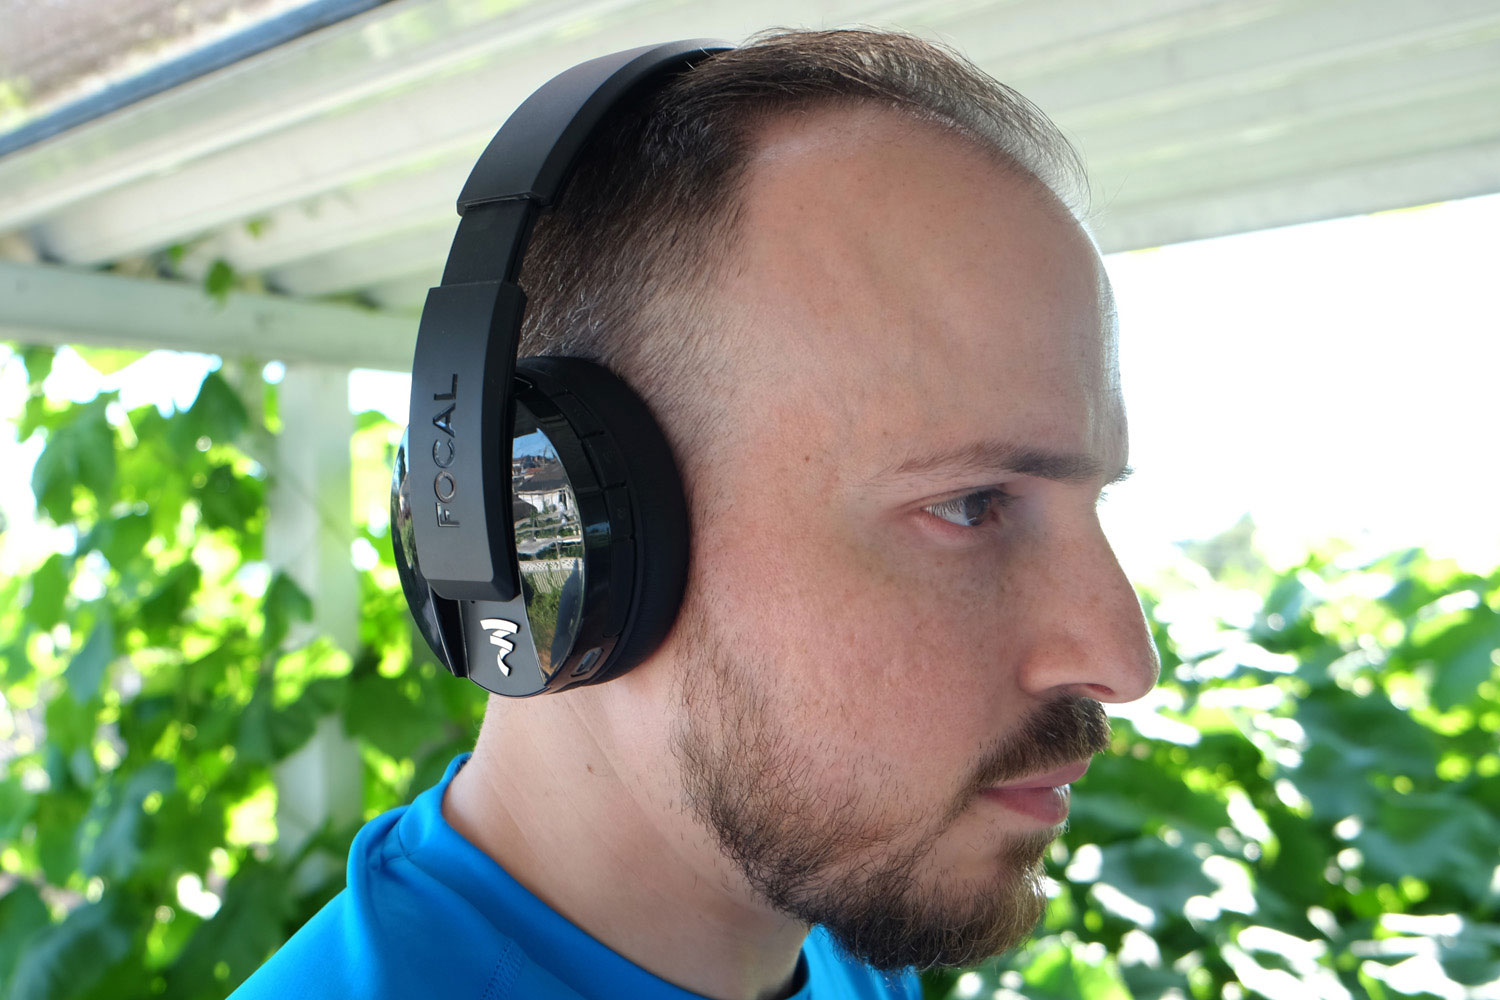 Focal Listen Wireless Over-Ear Headphones